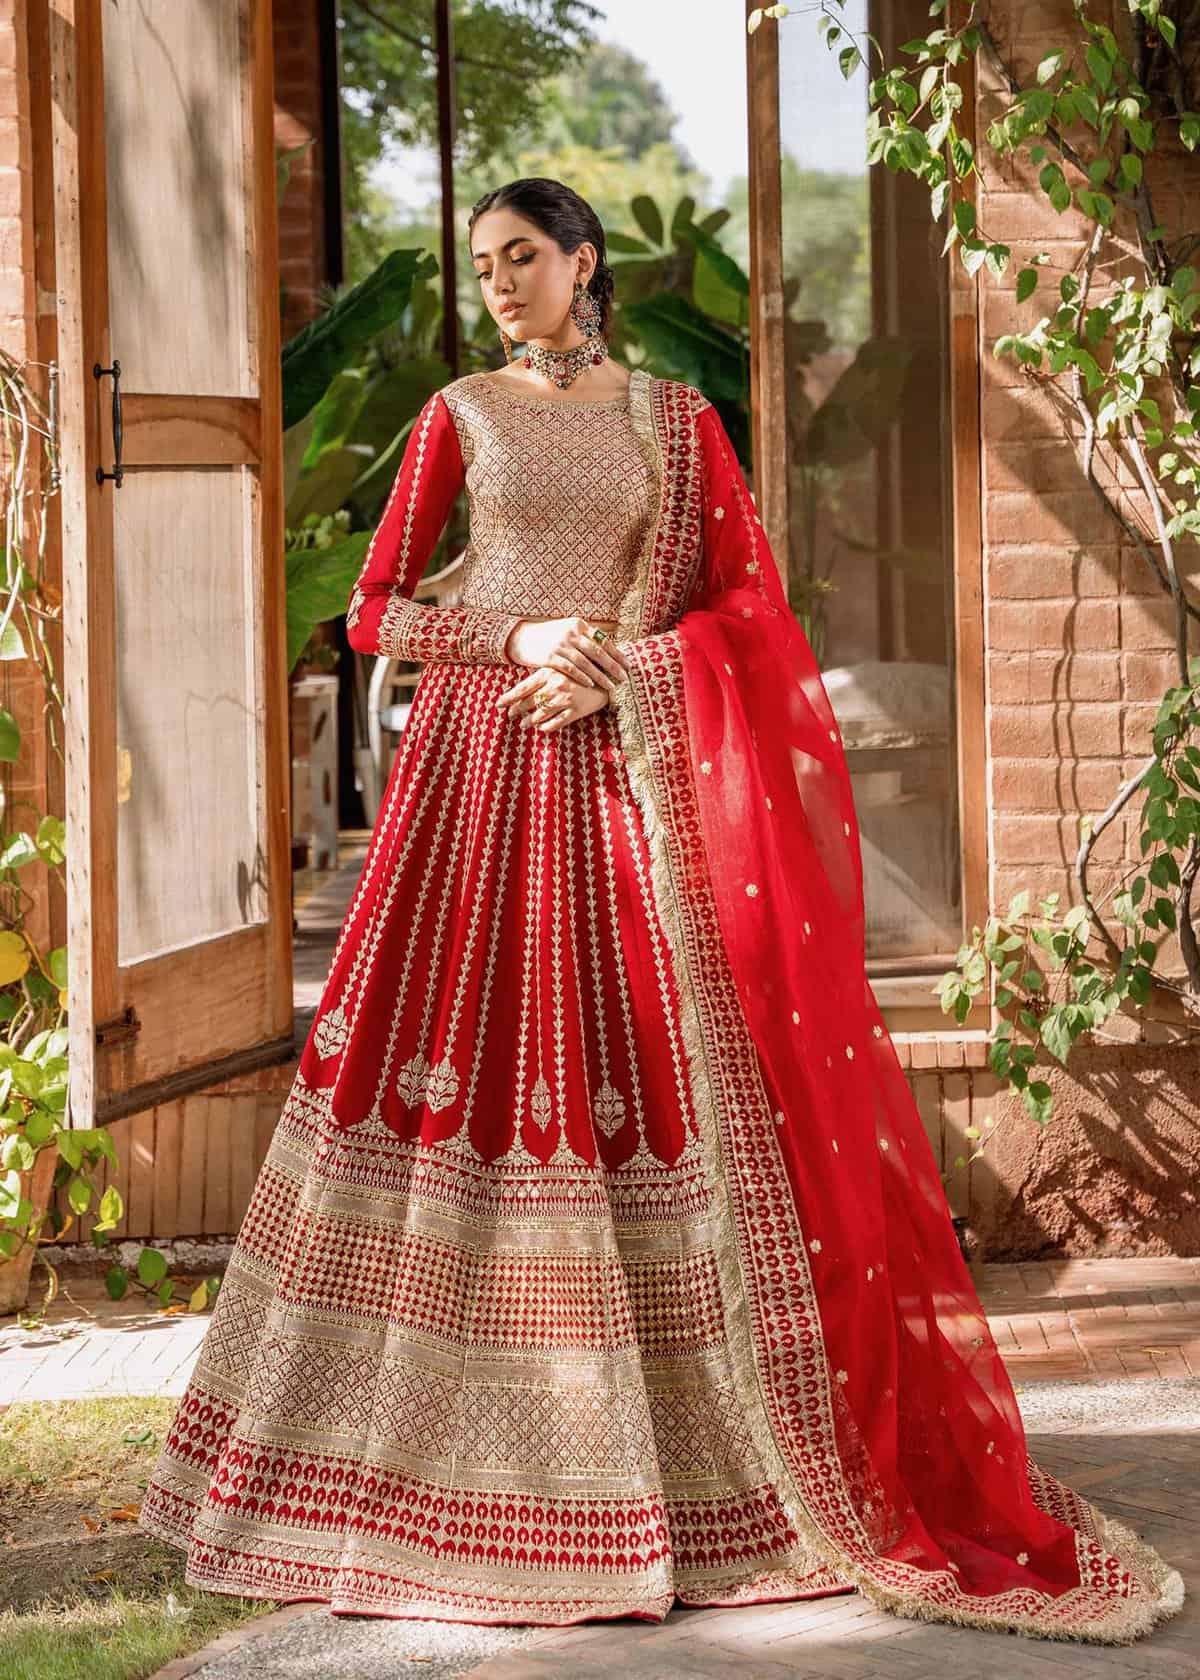 Bridal Lehenga For Mehendi: Elegant Designs For The Wedding Season That  Never Go Out Of Style